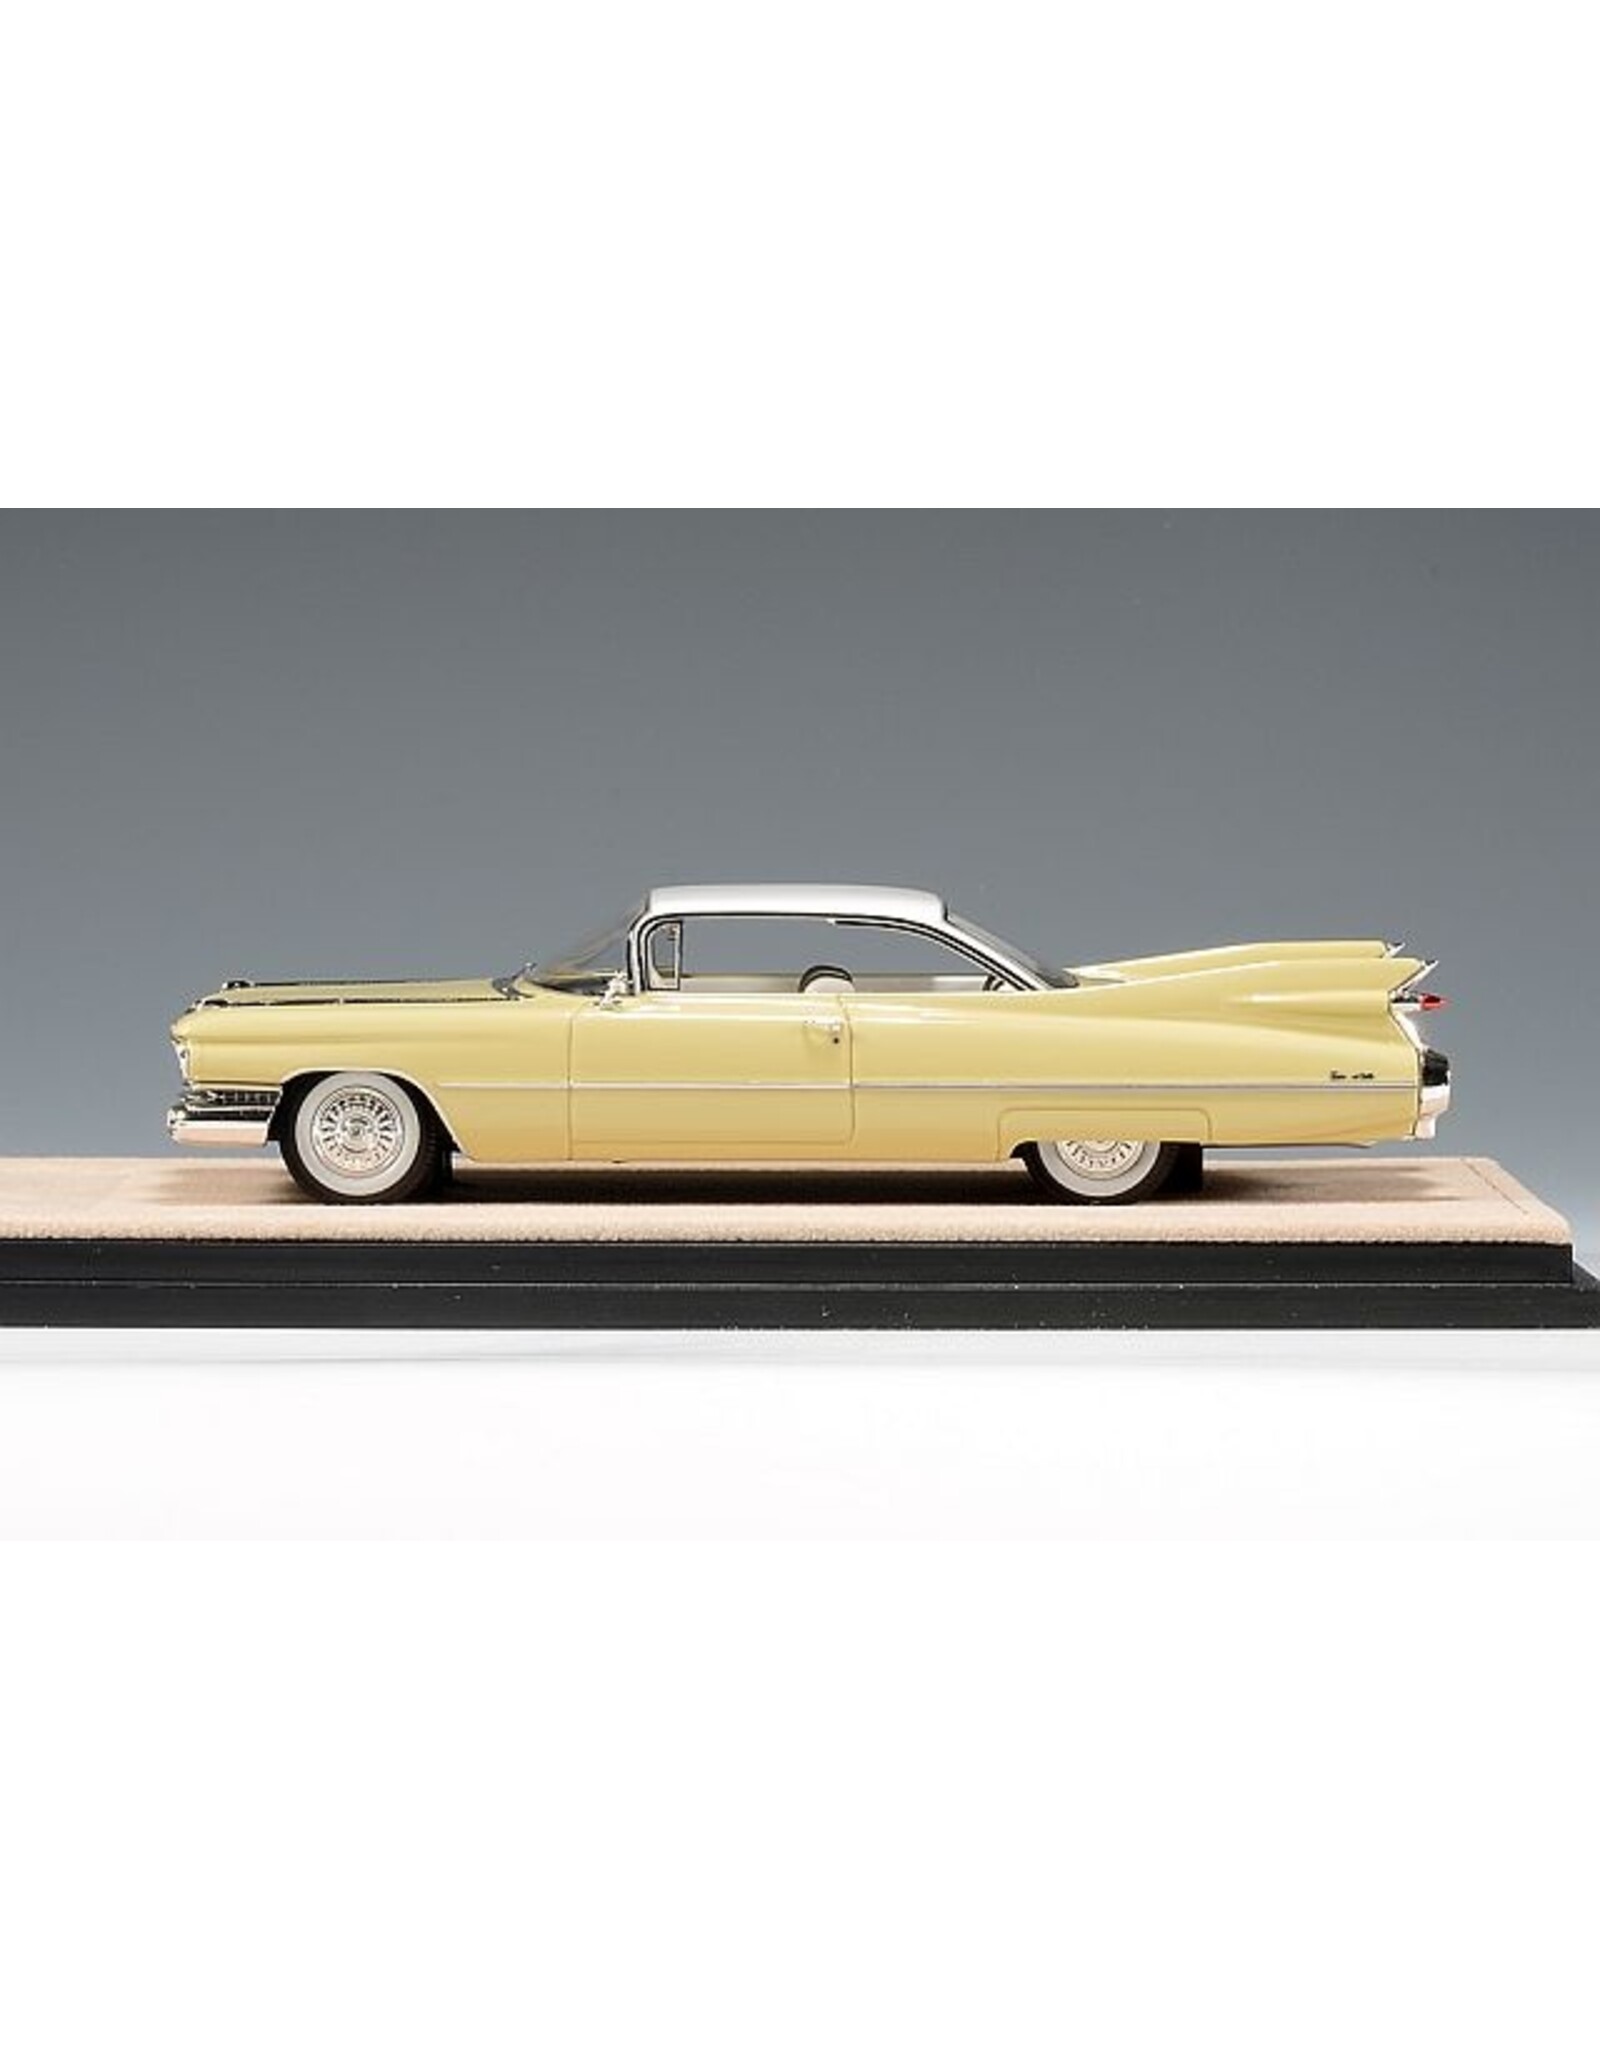 Cadillac(General Motors) Cadillac Coupe Deville(1959)Gotham gold